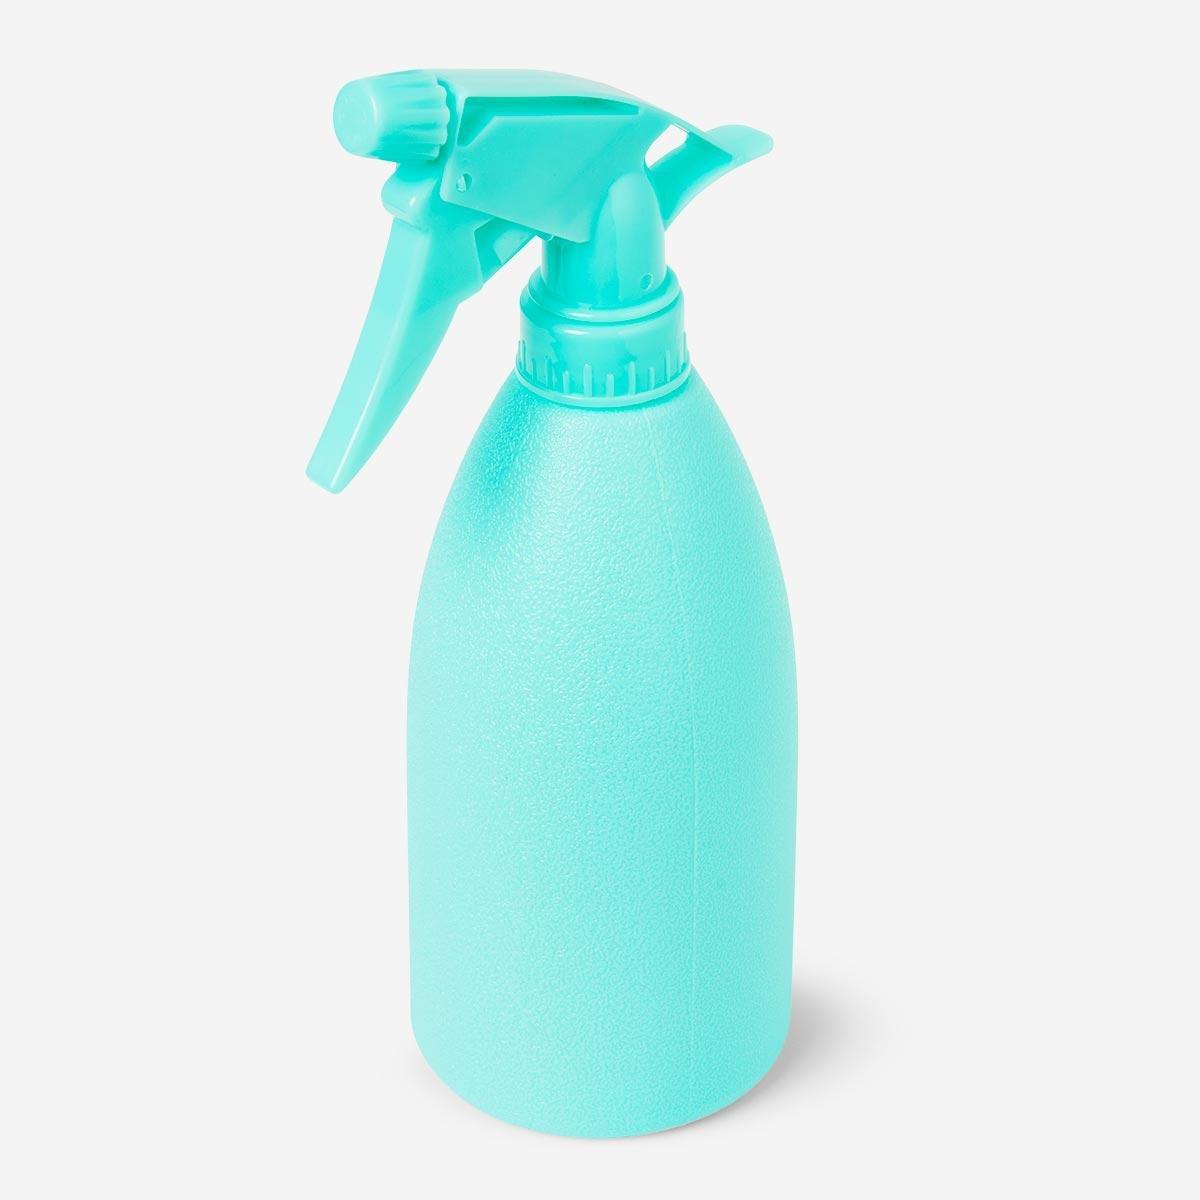 Blue mist spray bottle